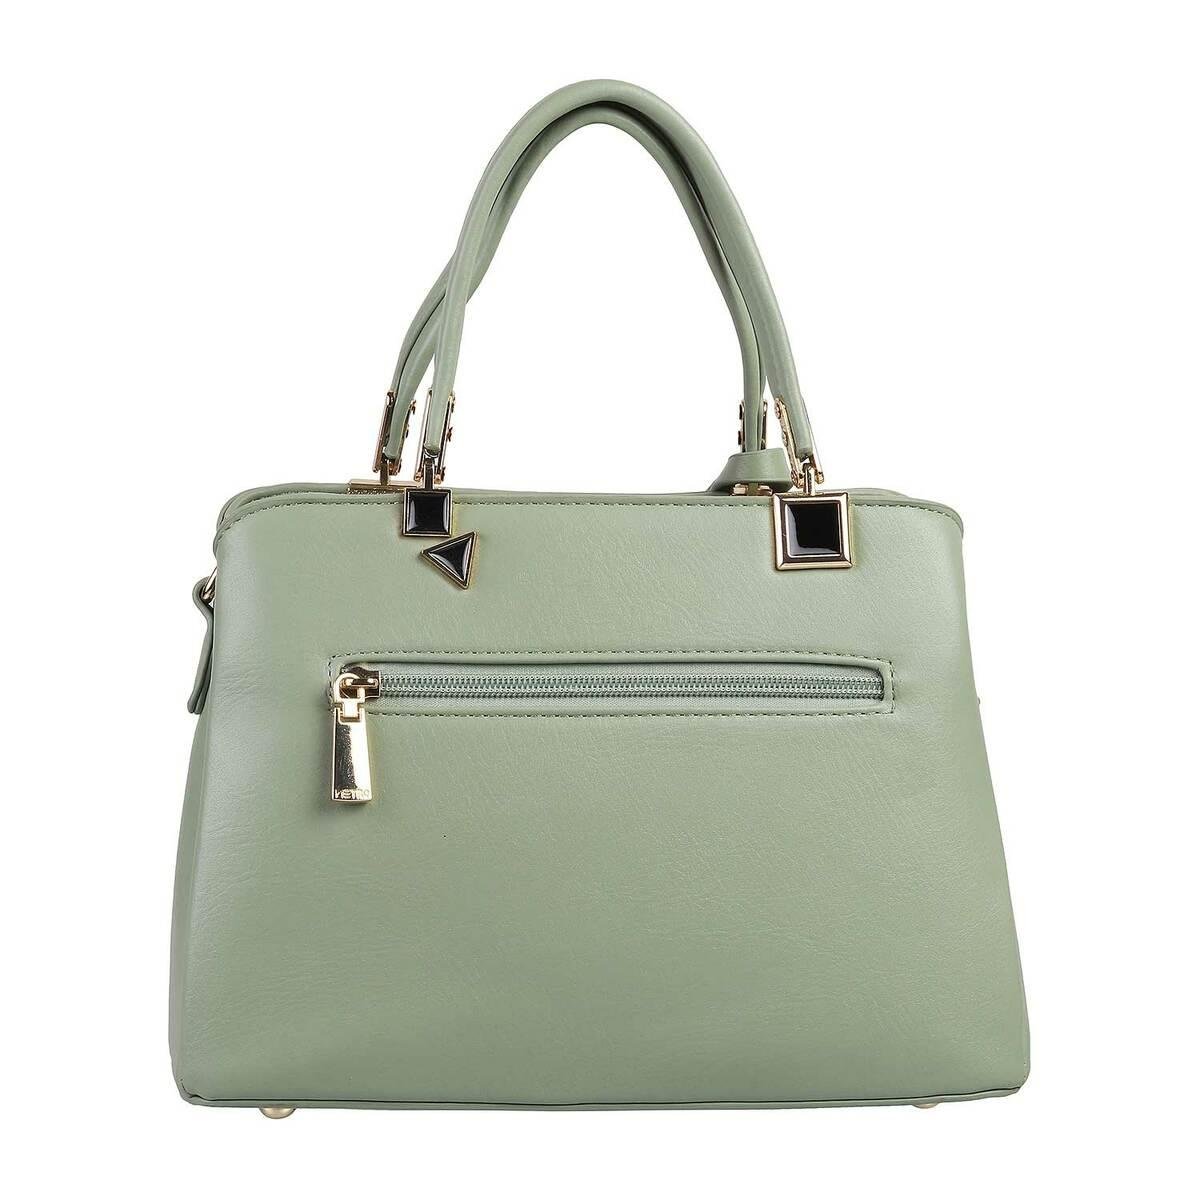 Buy Like Style Hand Bag women handbag PC-3 (Beige) at Amazon.in